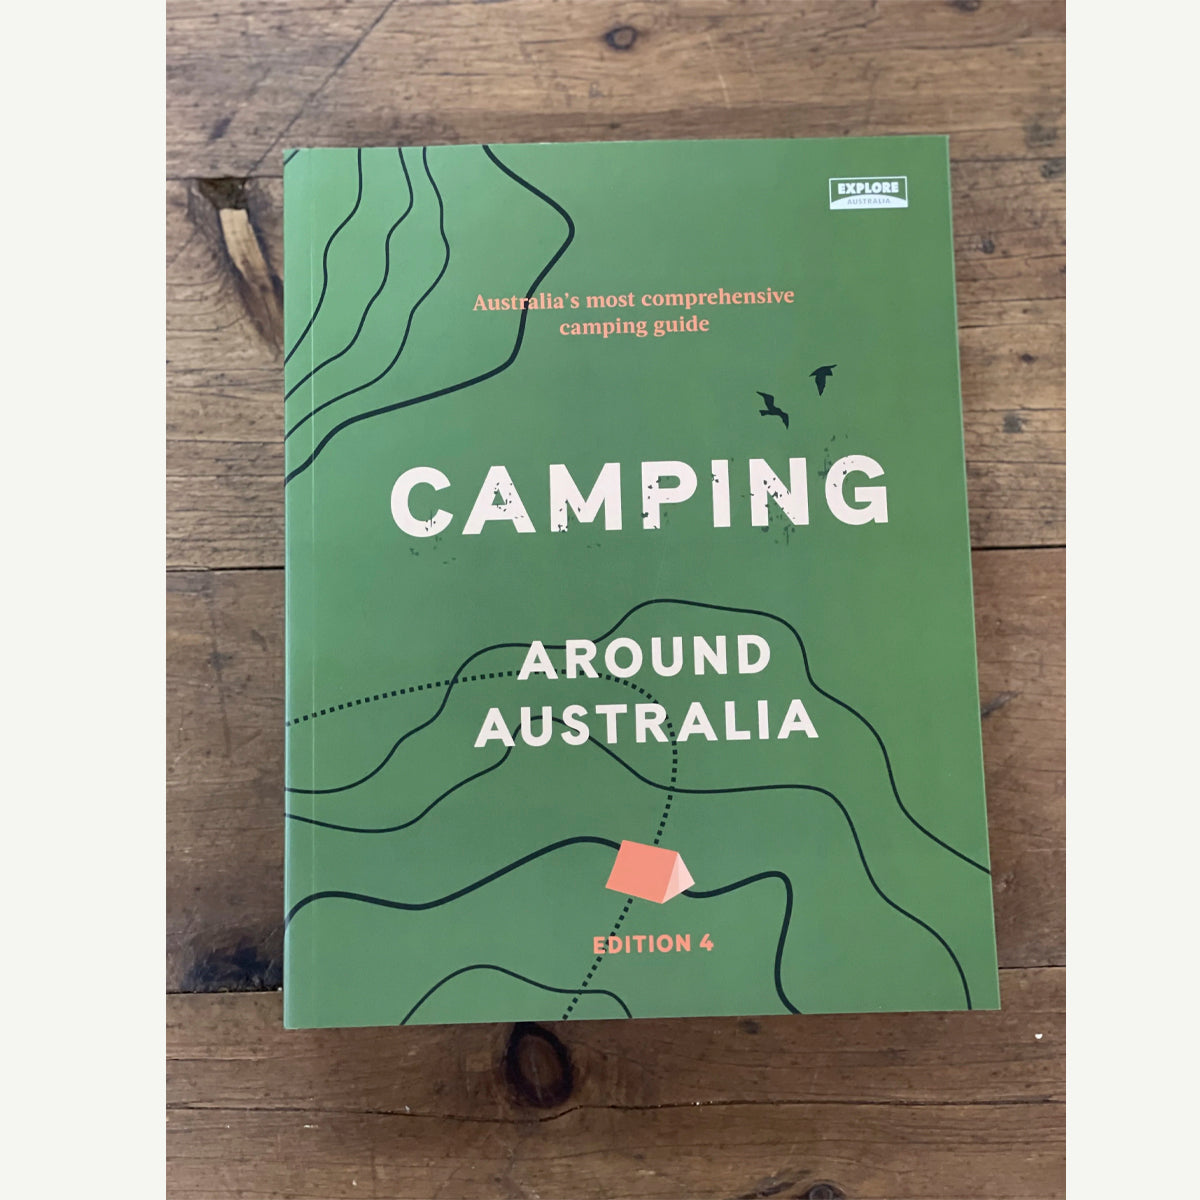 Camping around Australia - 4th Edition